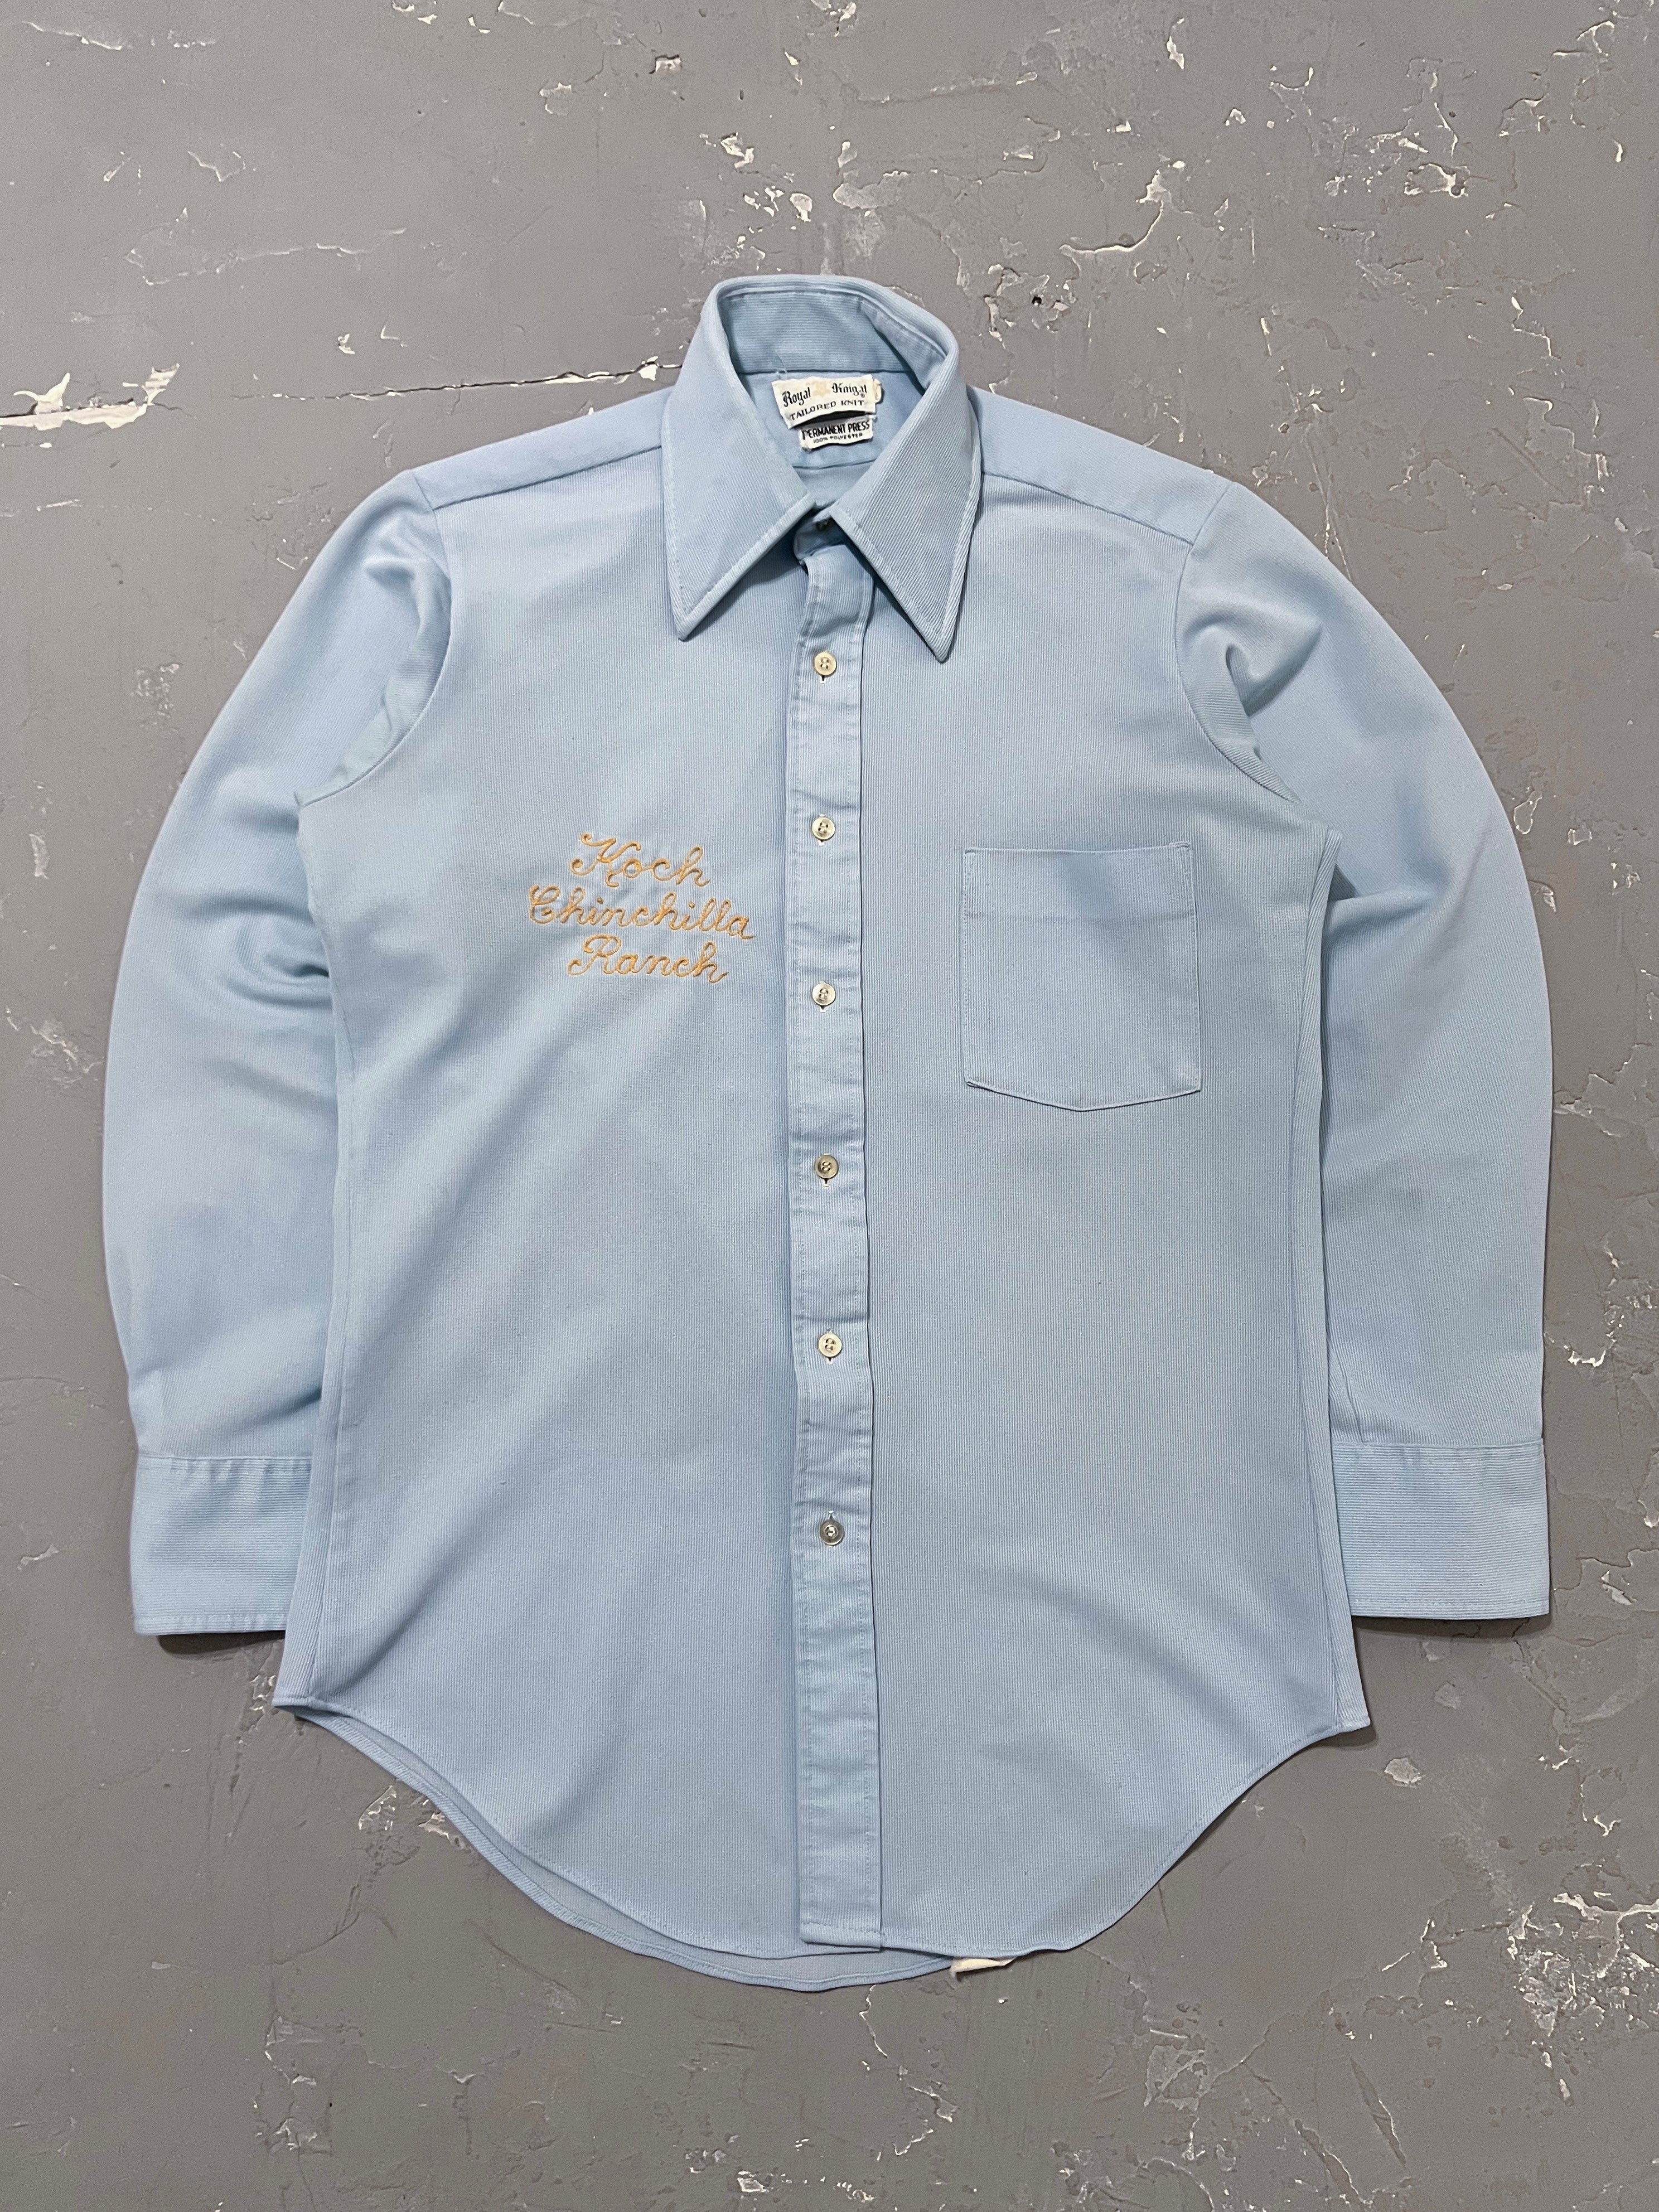 1970s Sky Blue Chain Stitch Shirt [M]